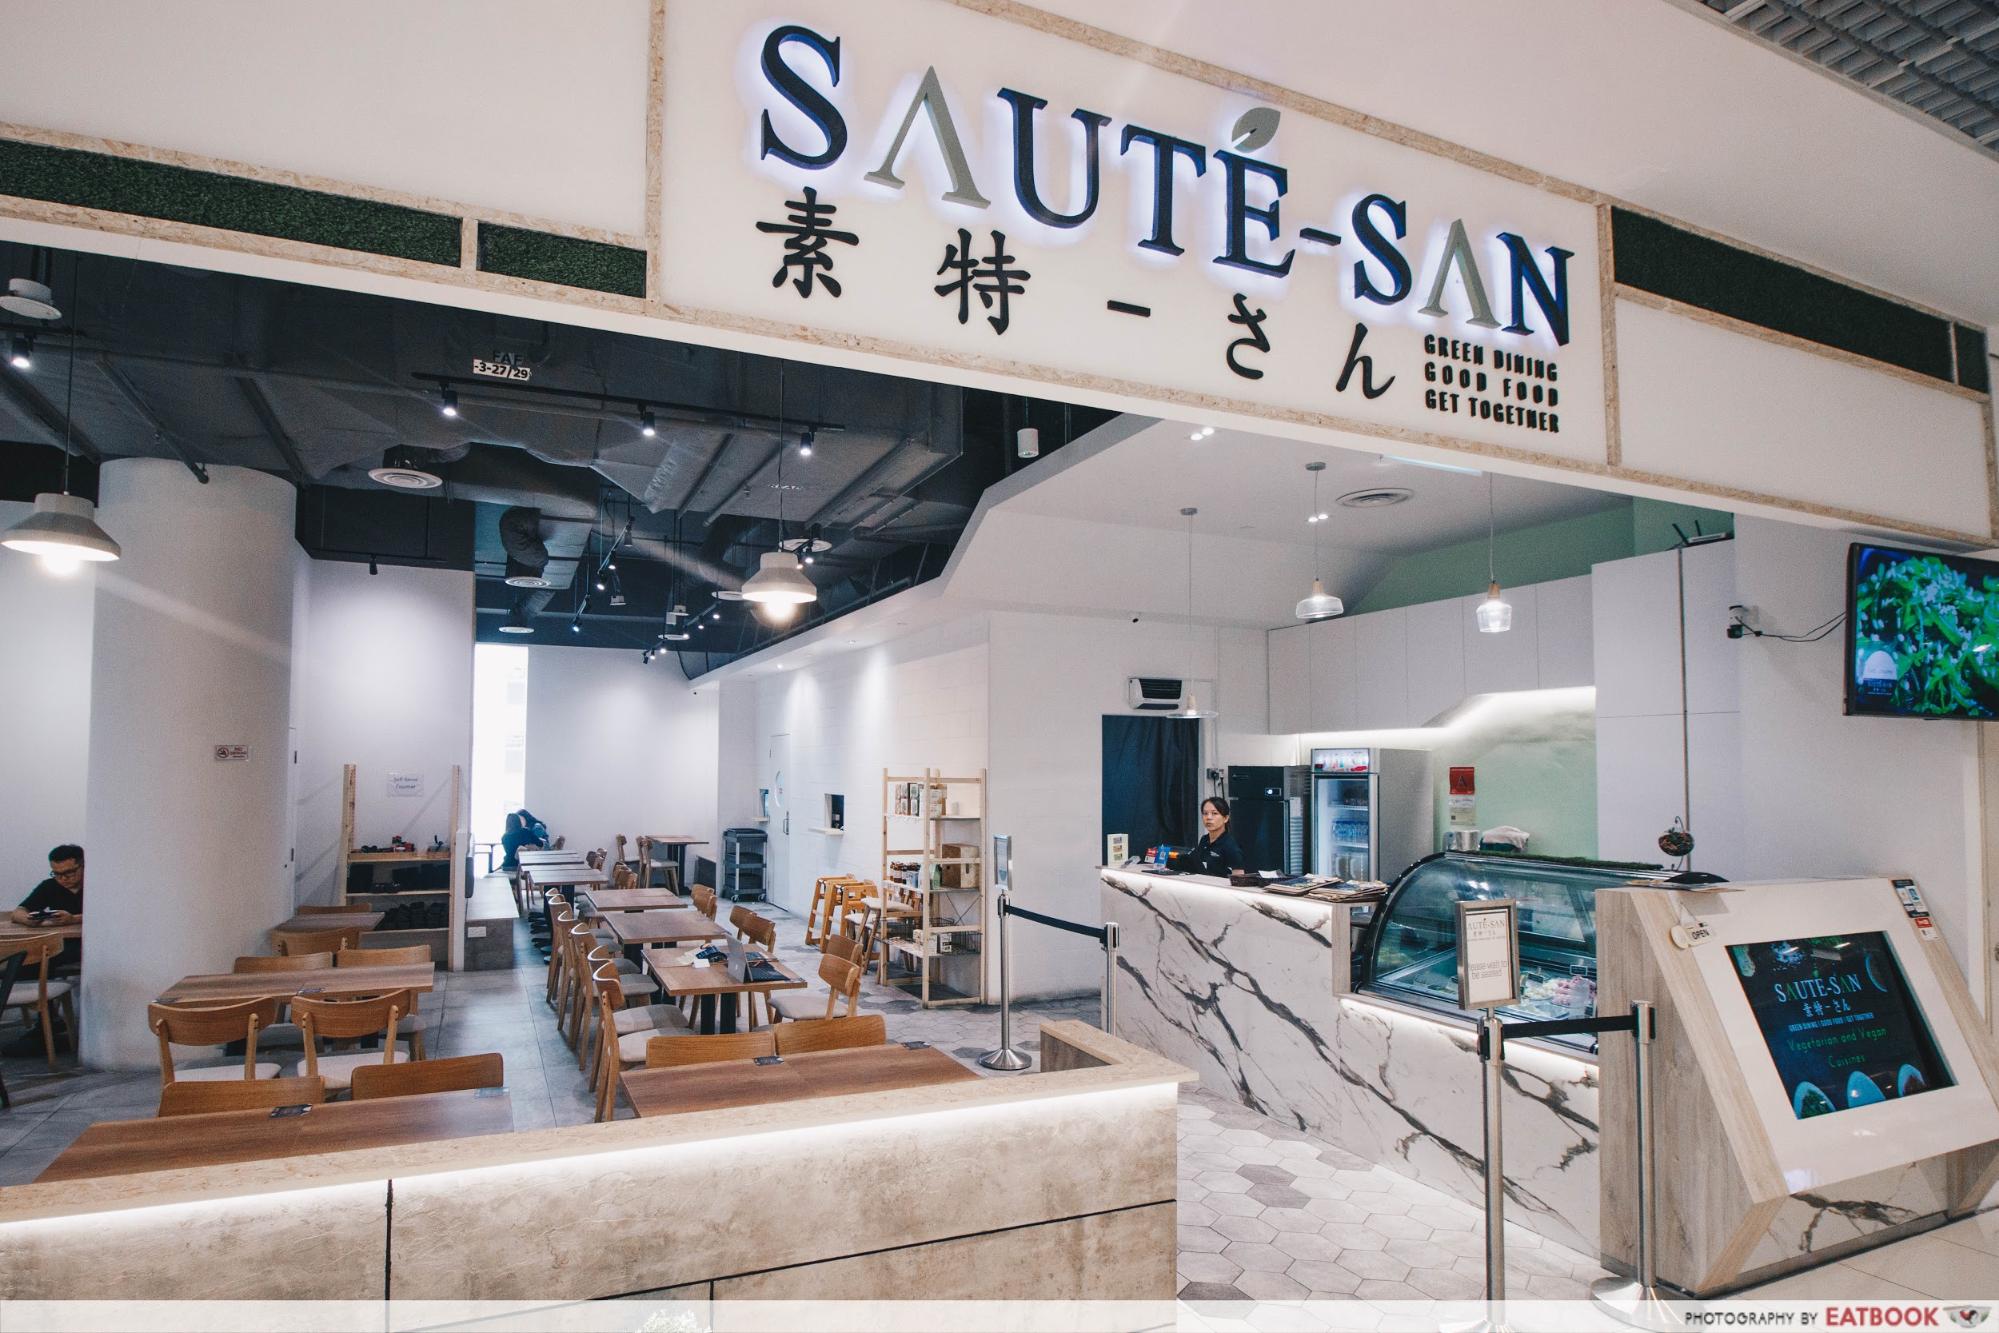 New Restaurant City Square Mall - Saute-San